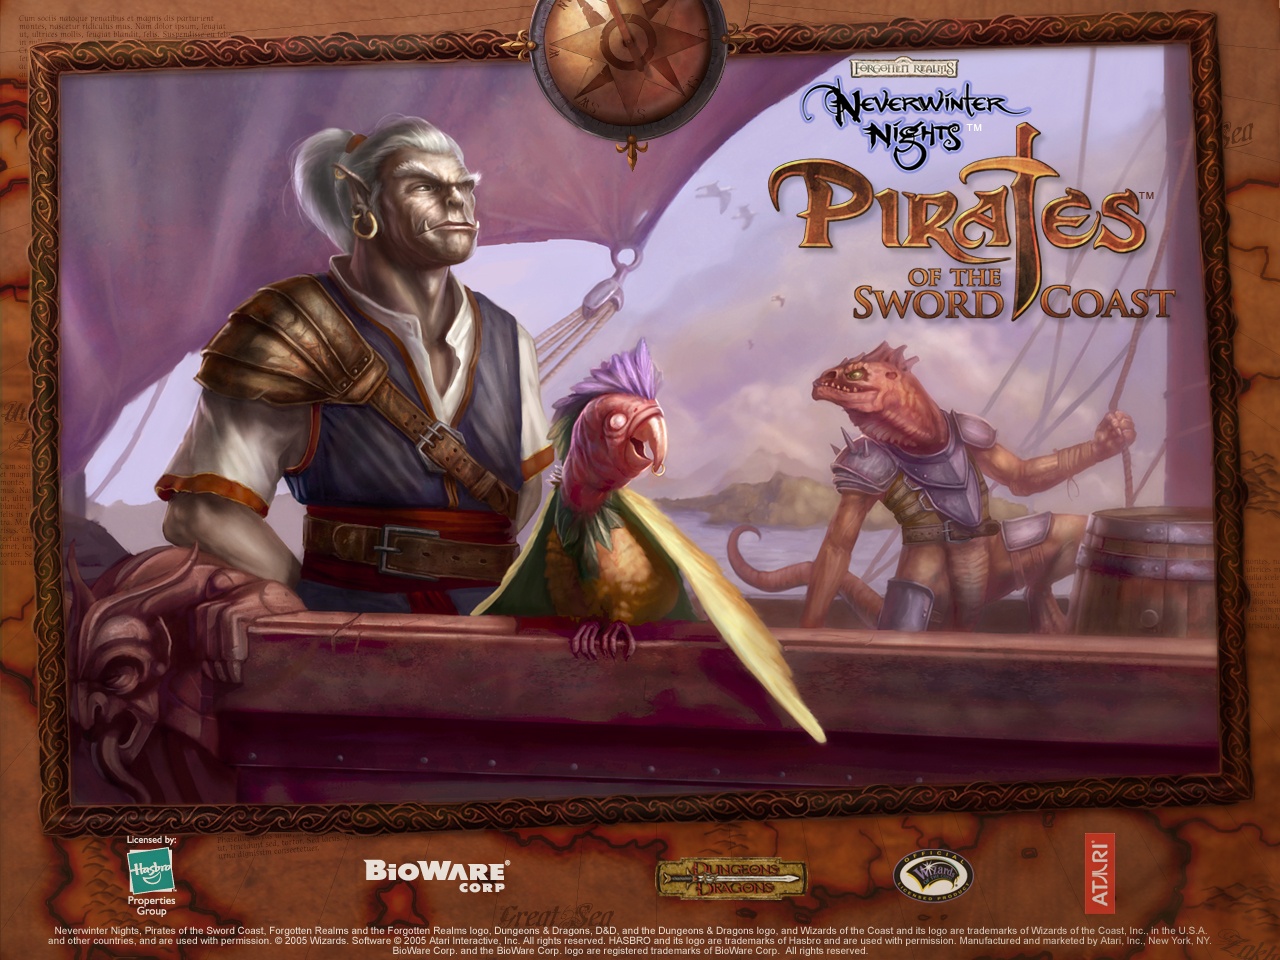 neverwinter nights, video game, neverwinter nights: pirates of the sword coast, pirate